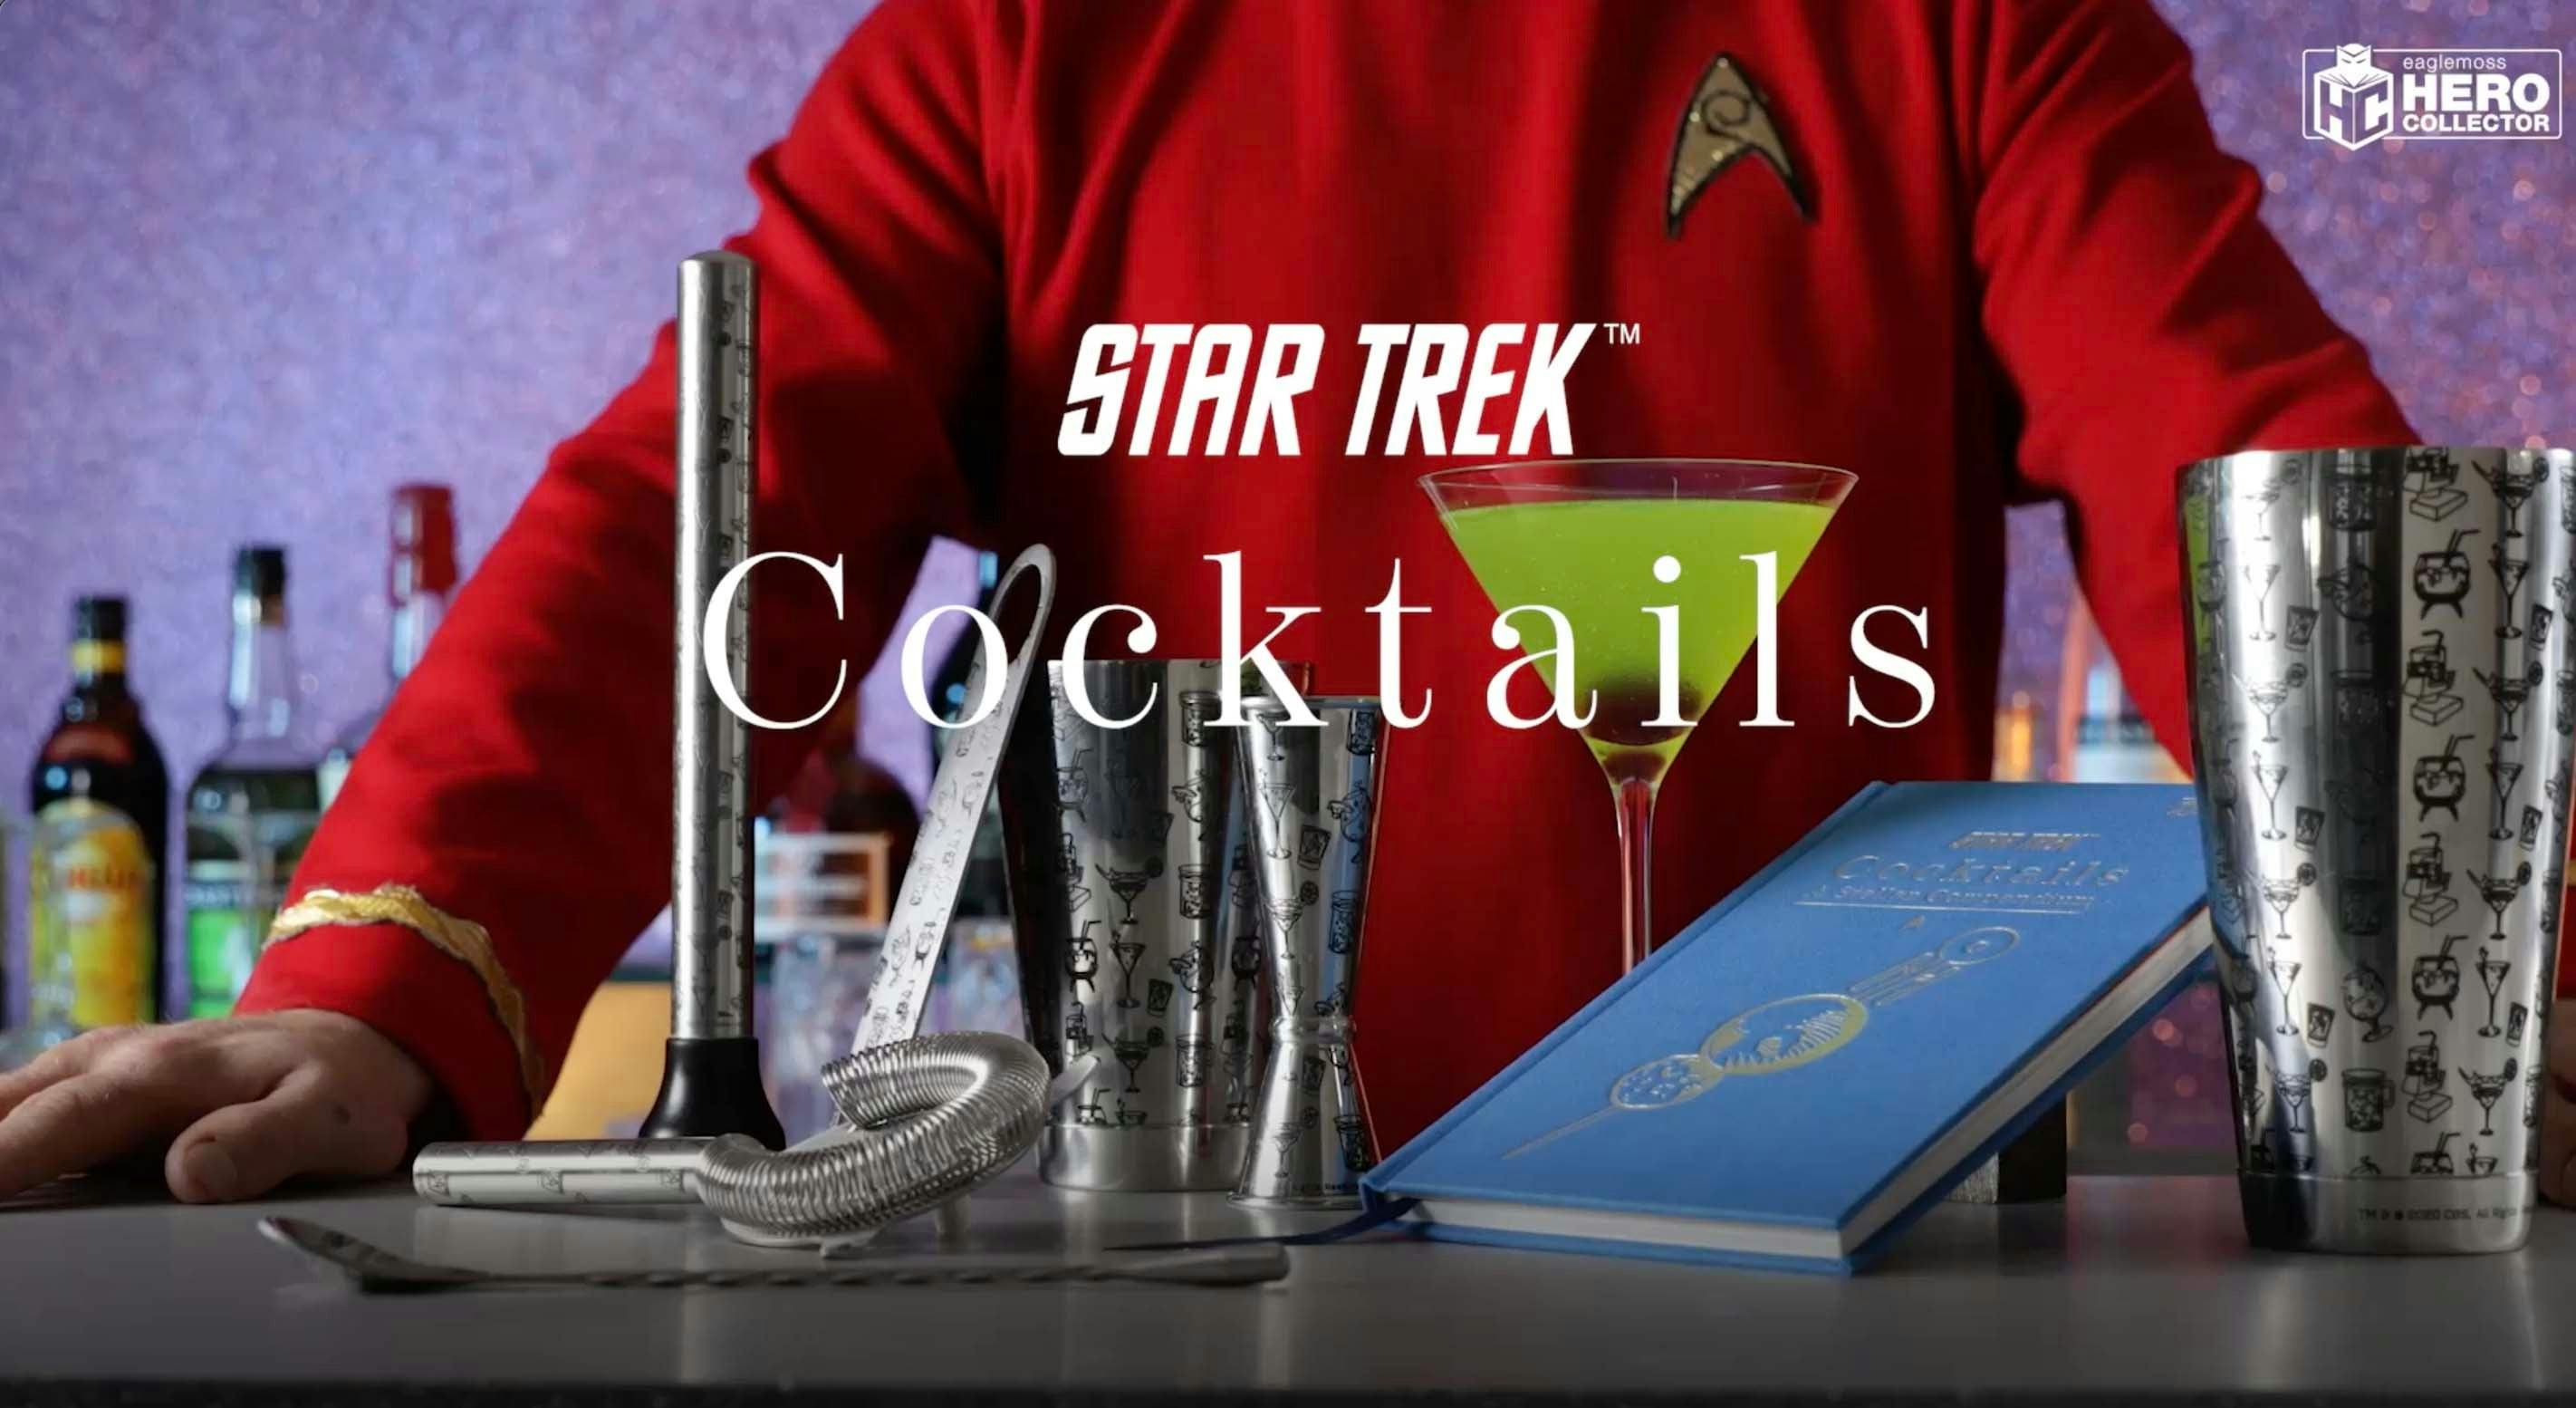 Star Trek Cocktail